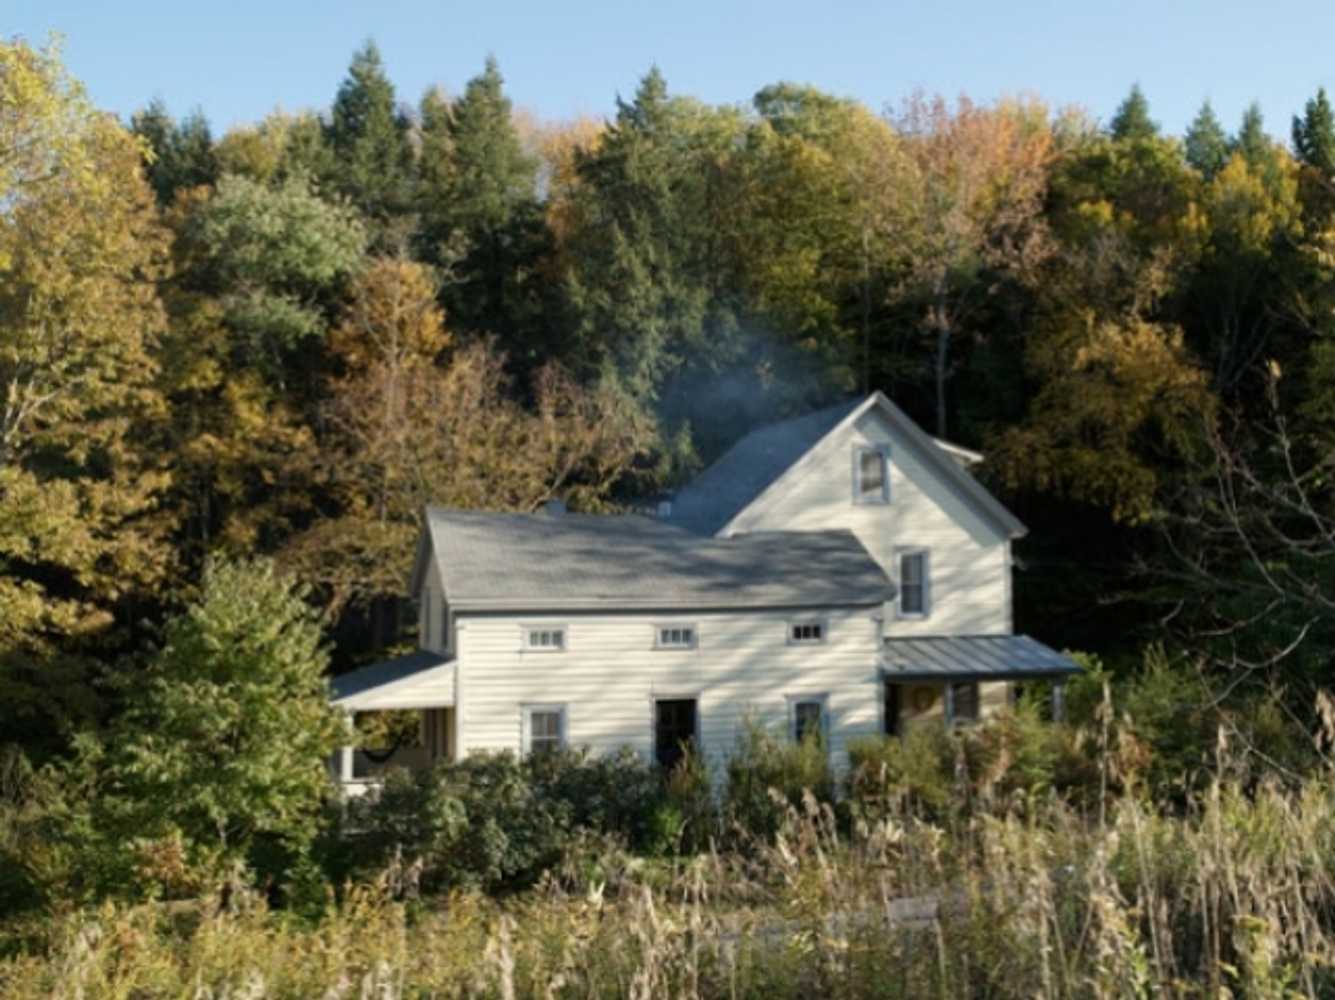 Pennsylvania Farmhouse Project